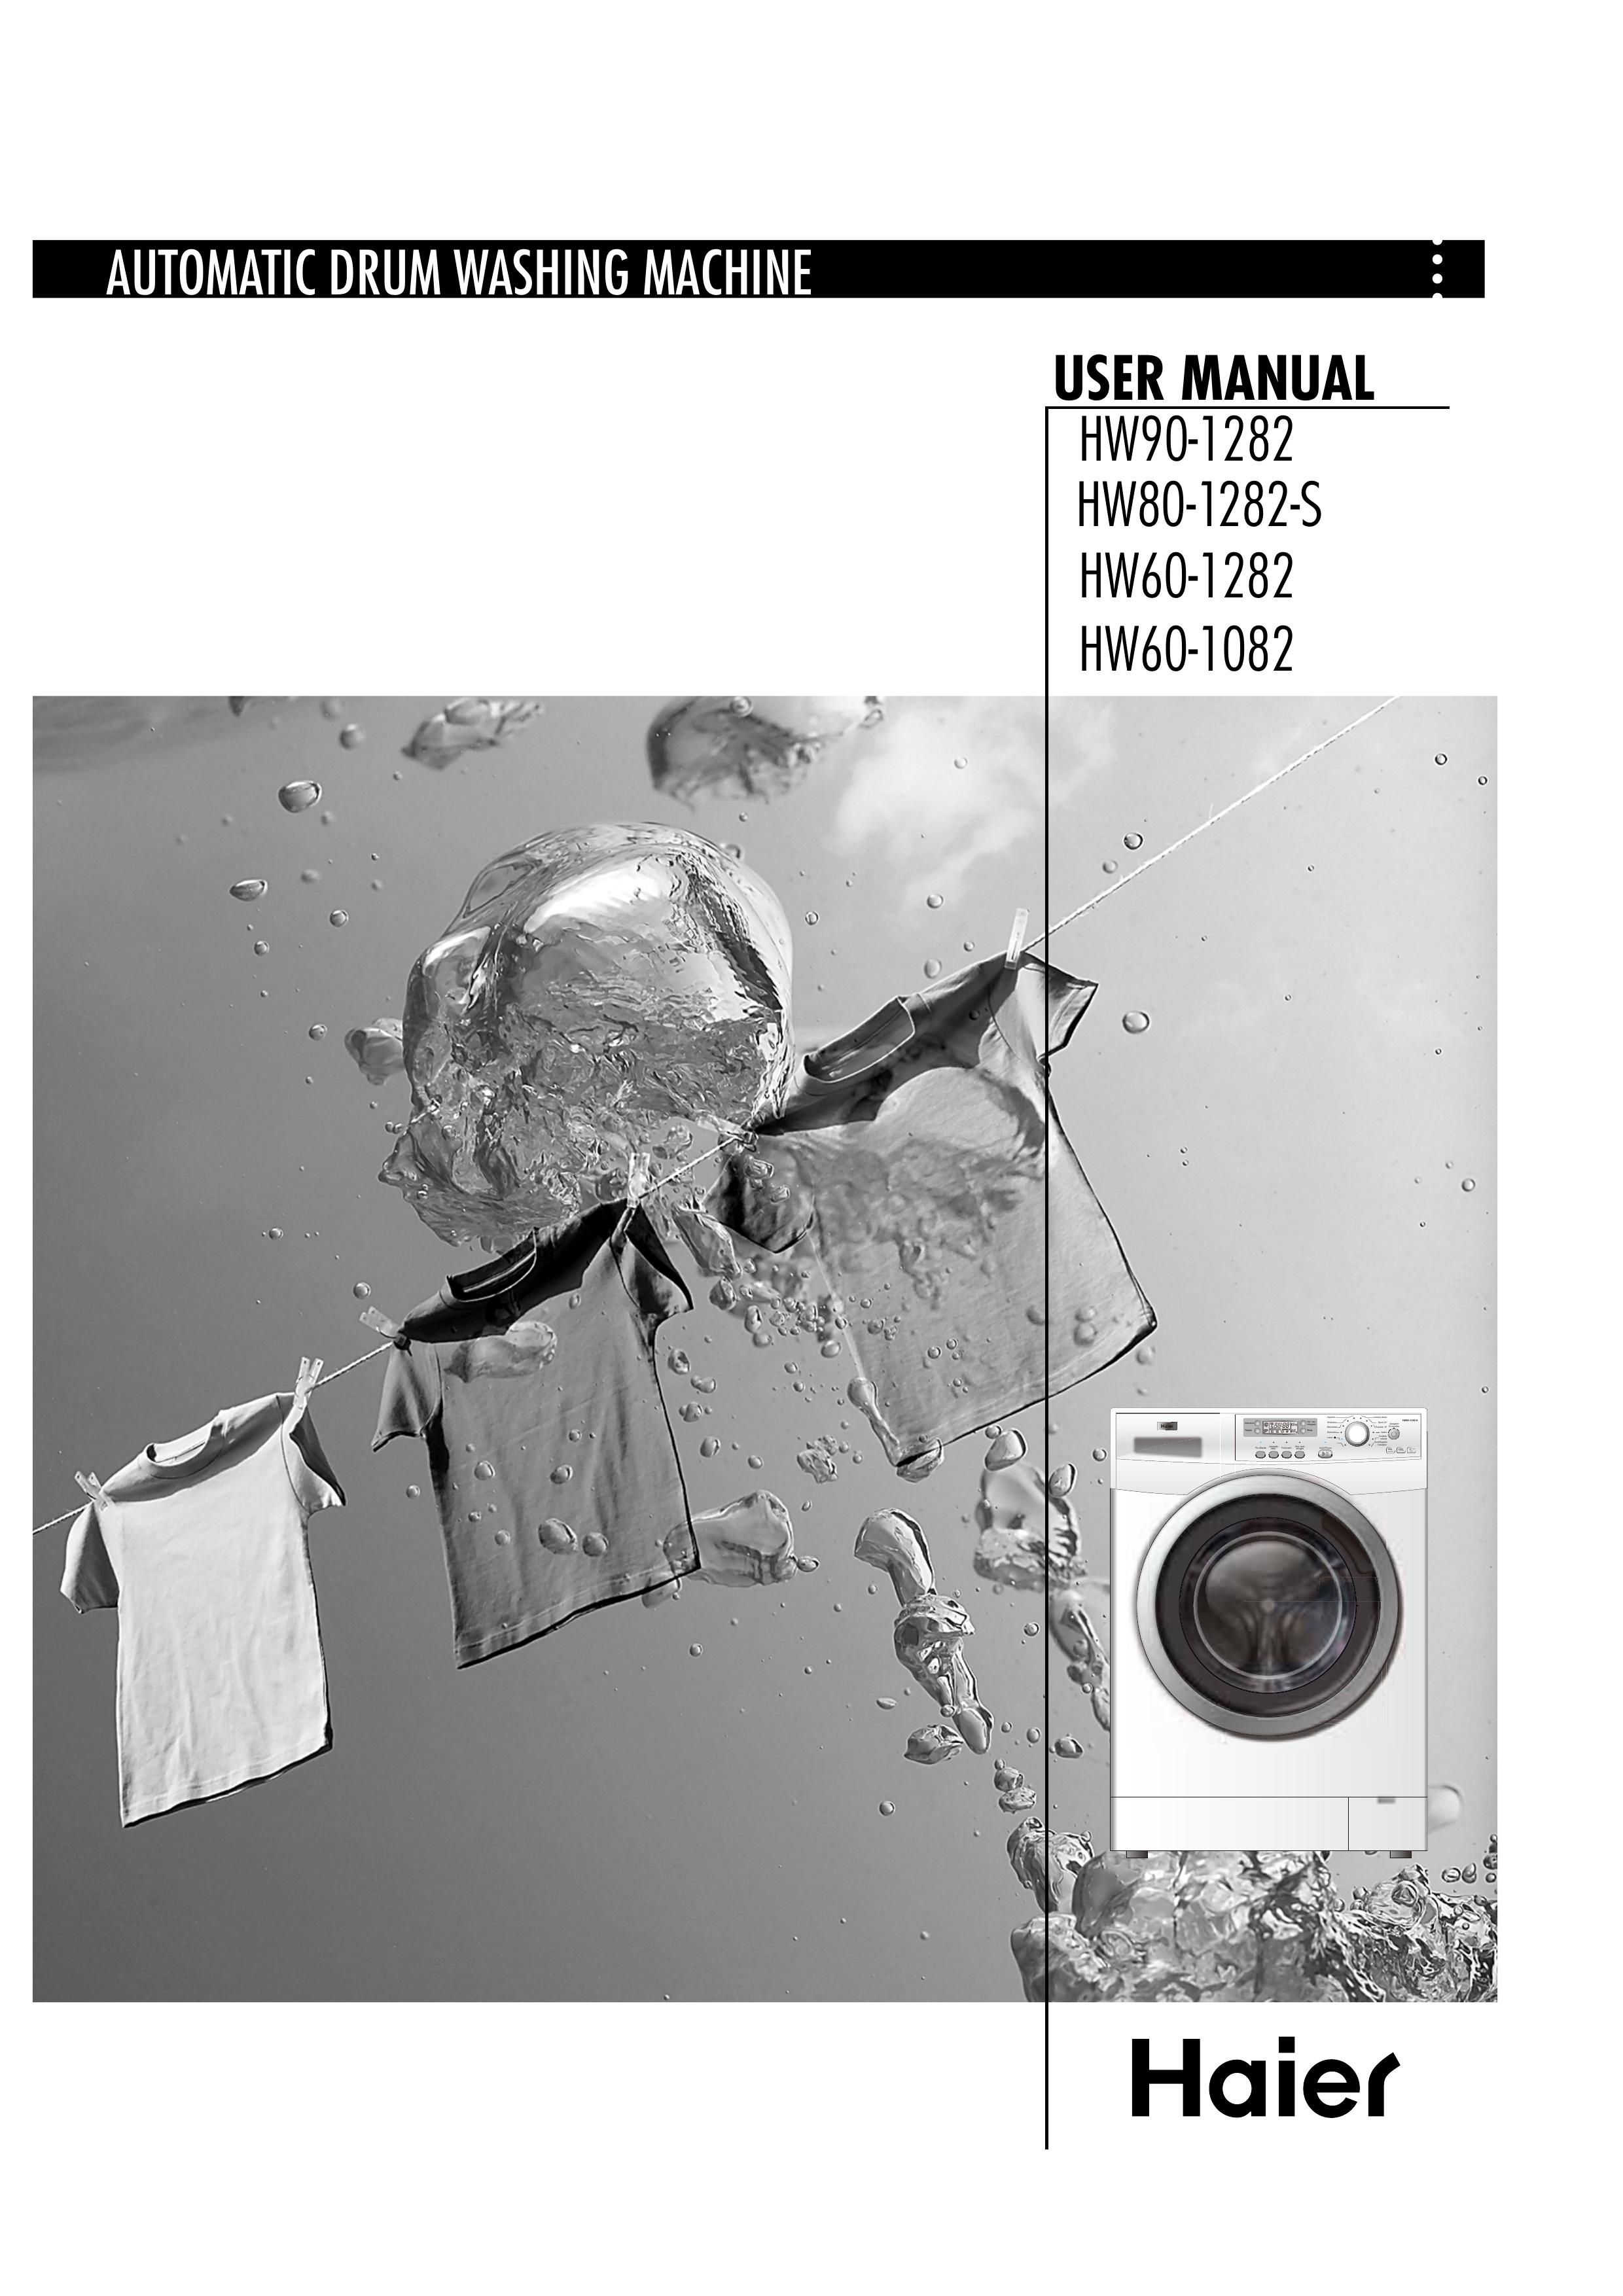 Haier HW60-1082 Washer/Dryer User Manual